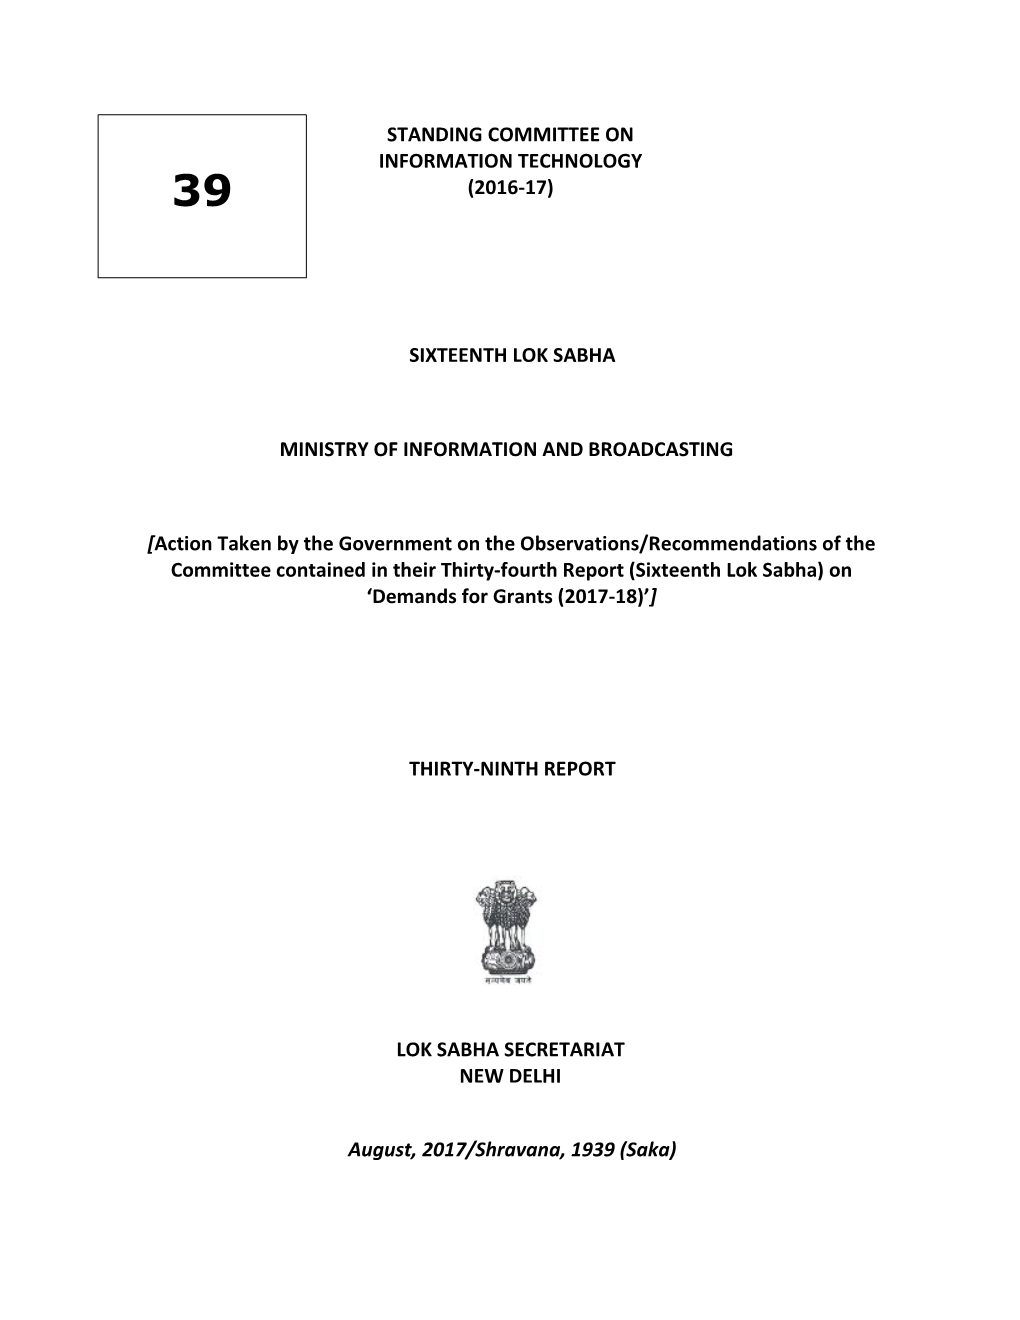 (2016-17) Sixteenth Lok Sabha Ministry of Information And